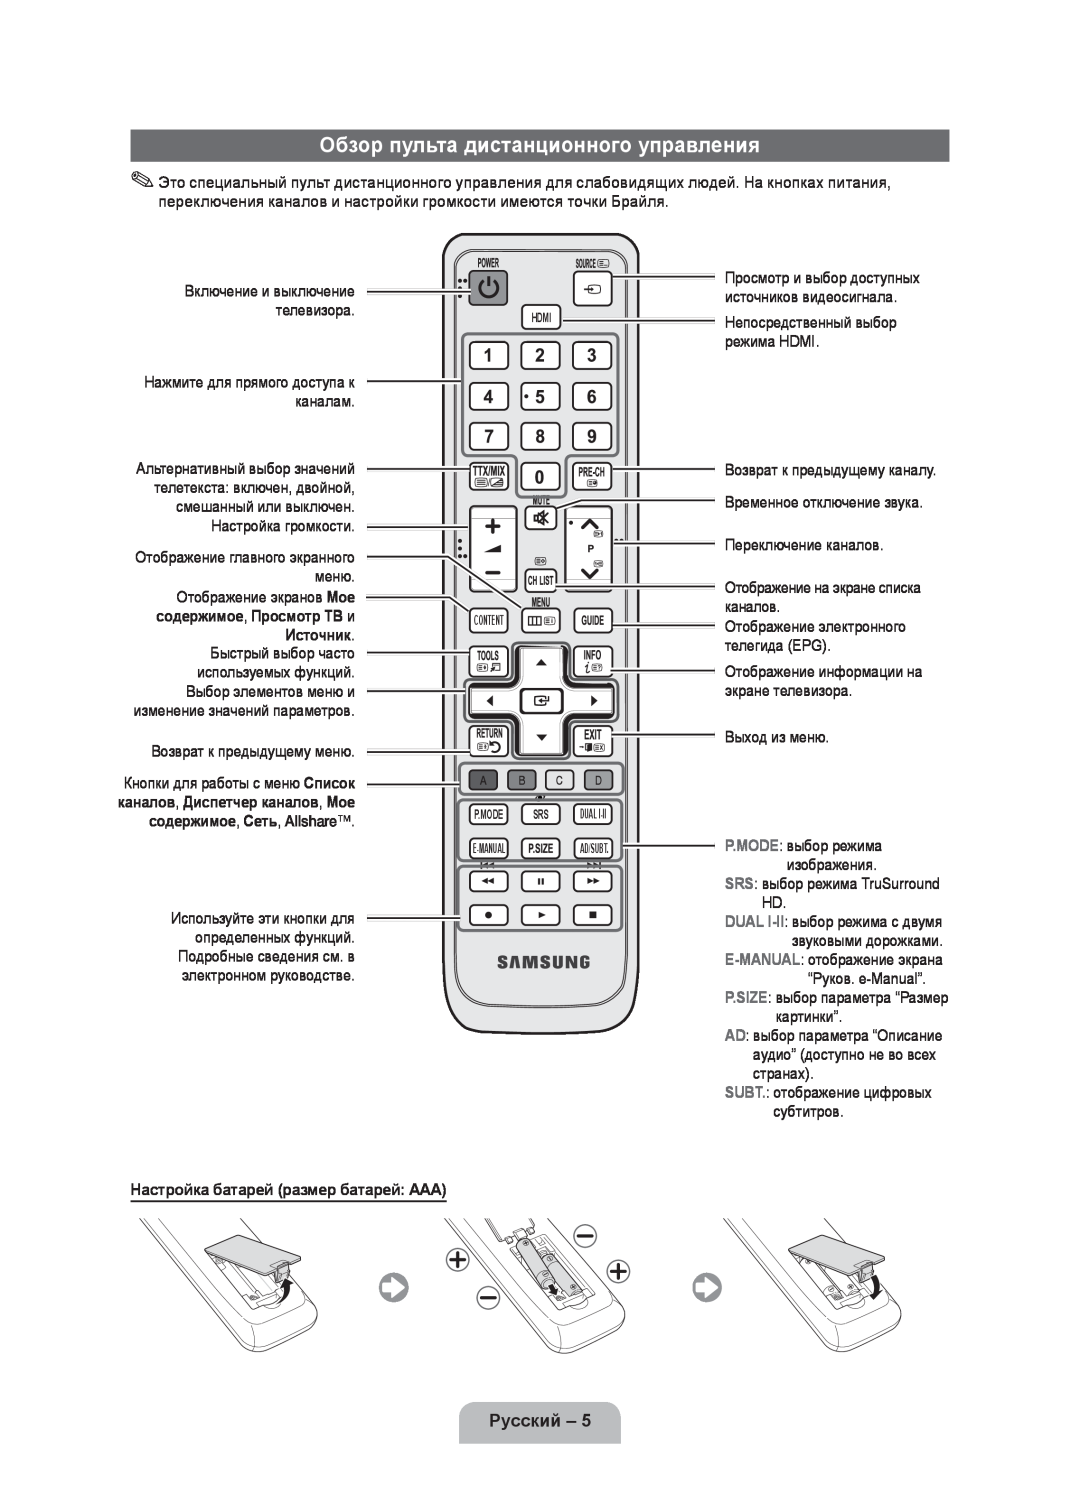 Samsung UE46D5000PWXBT manual Обзор пульта дистанционного управления, Русский, Настройка батарей размер батарей AAA 